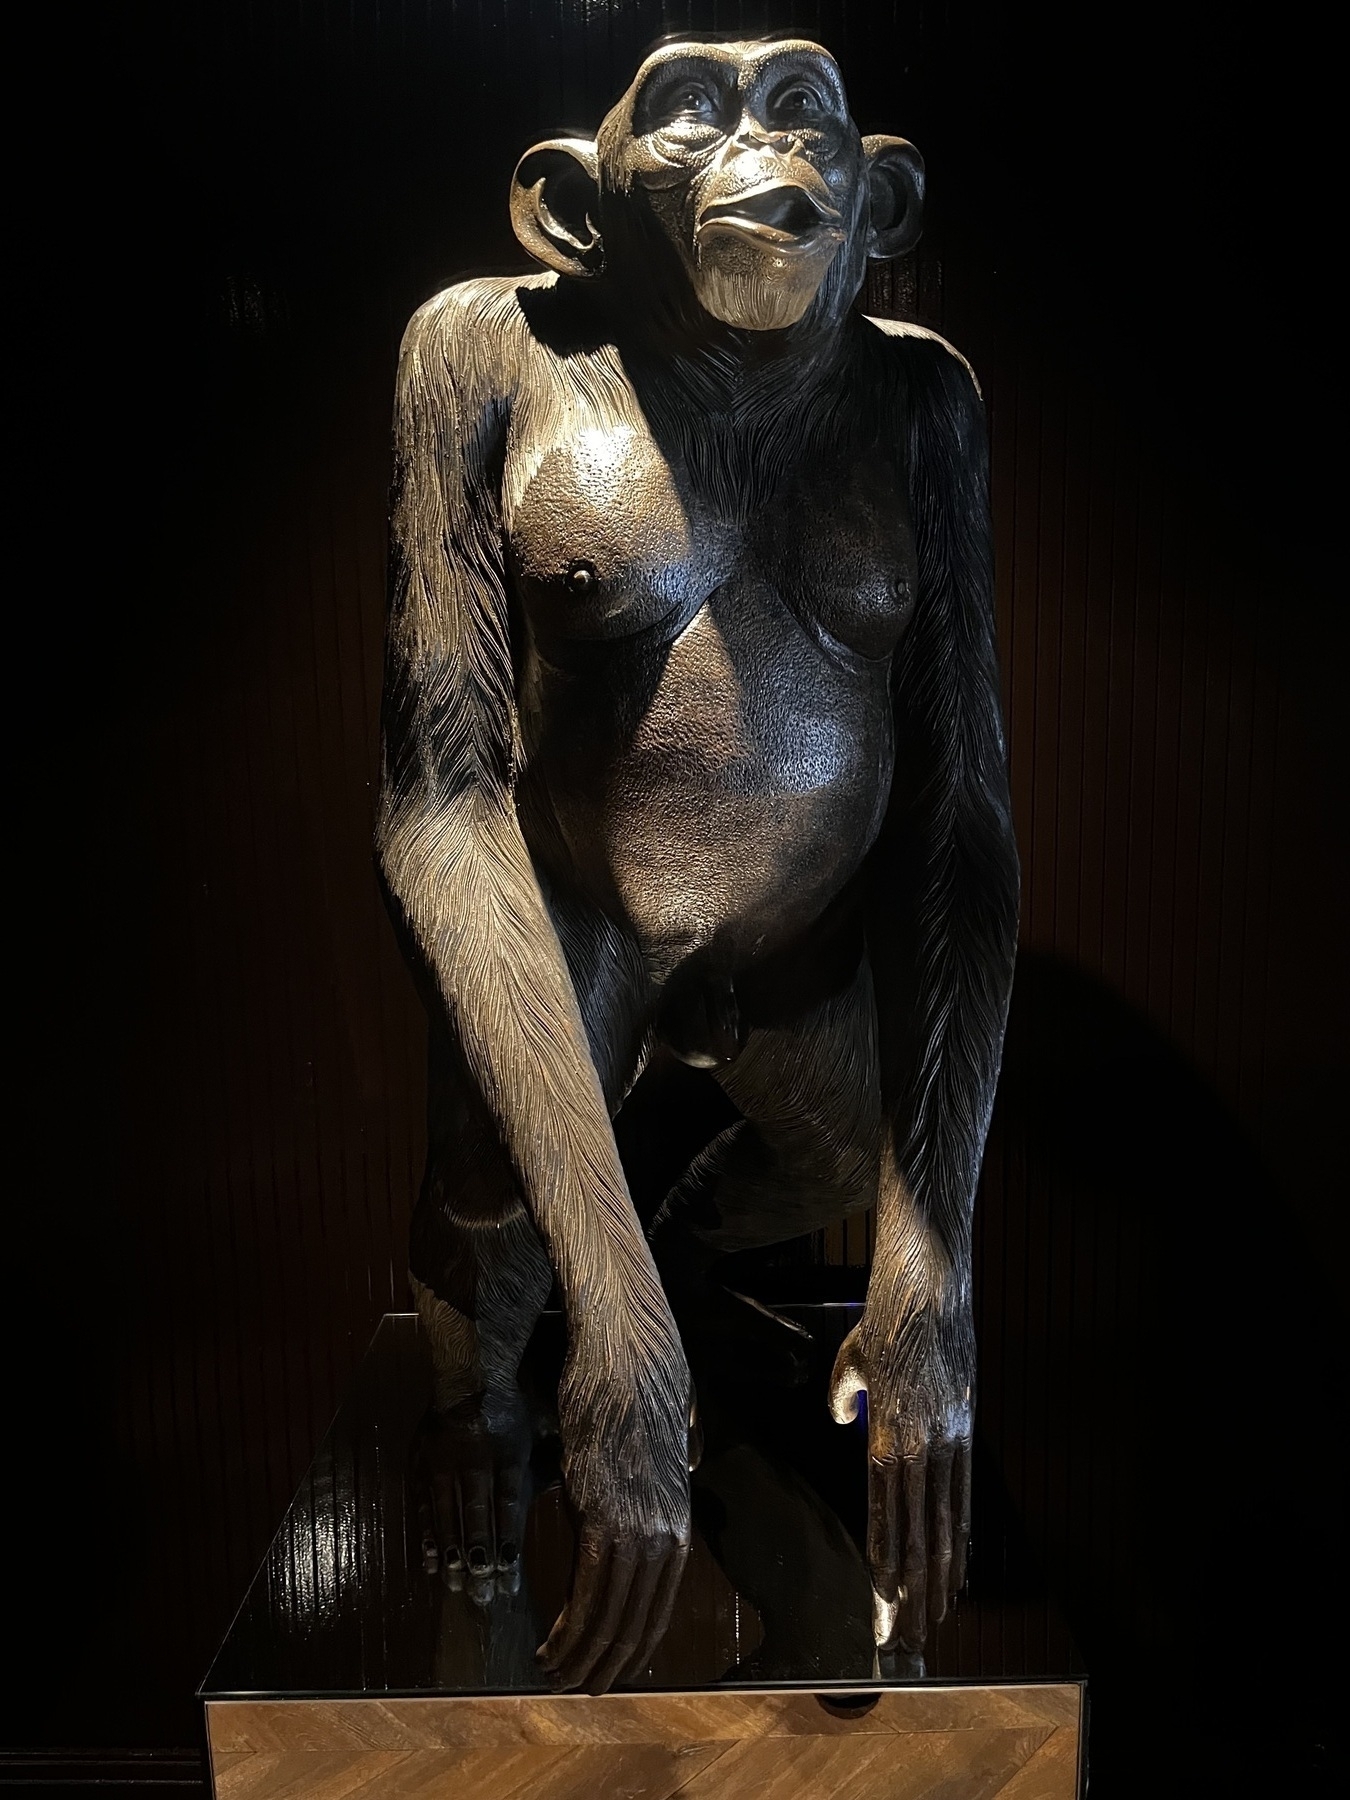 A full size statue of a chimpanzee